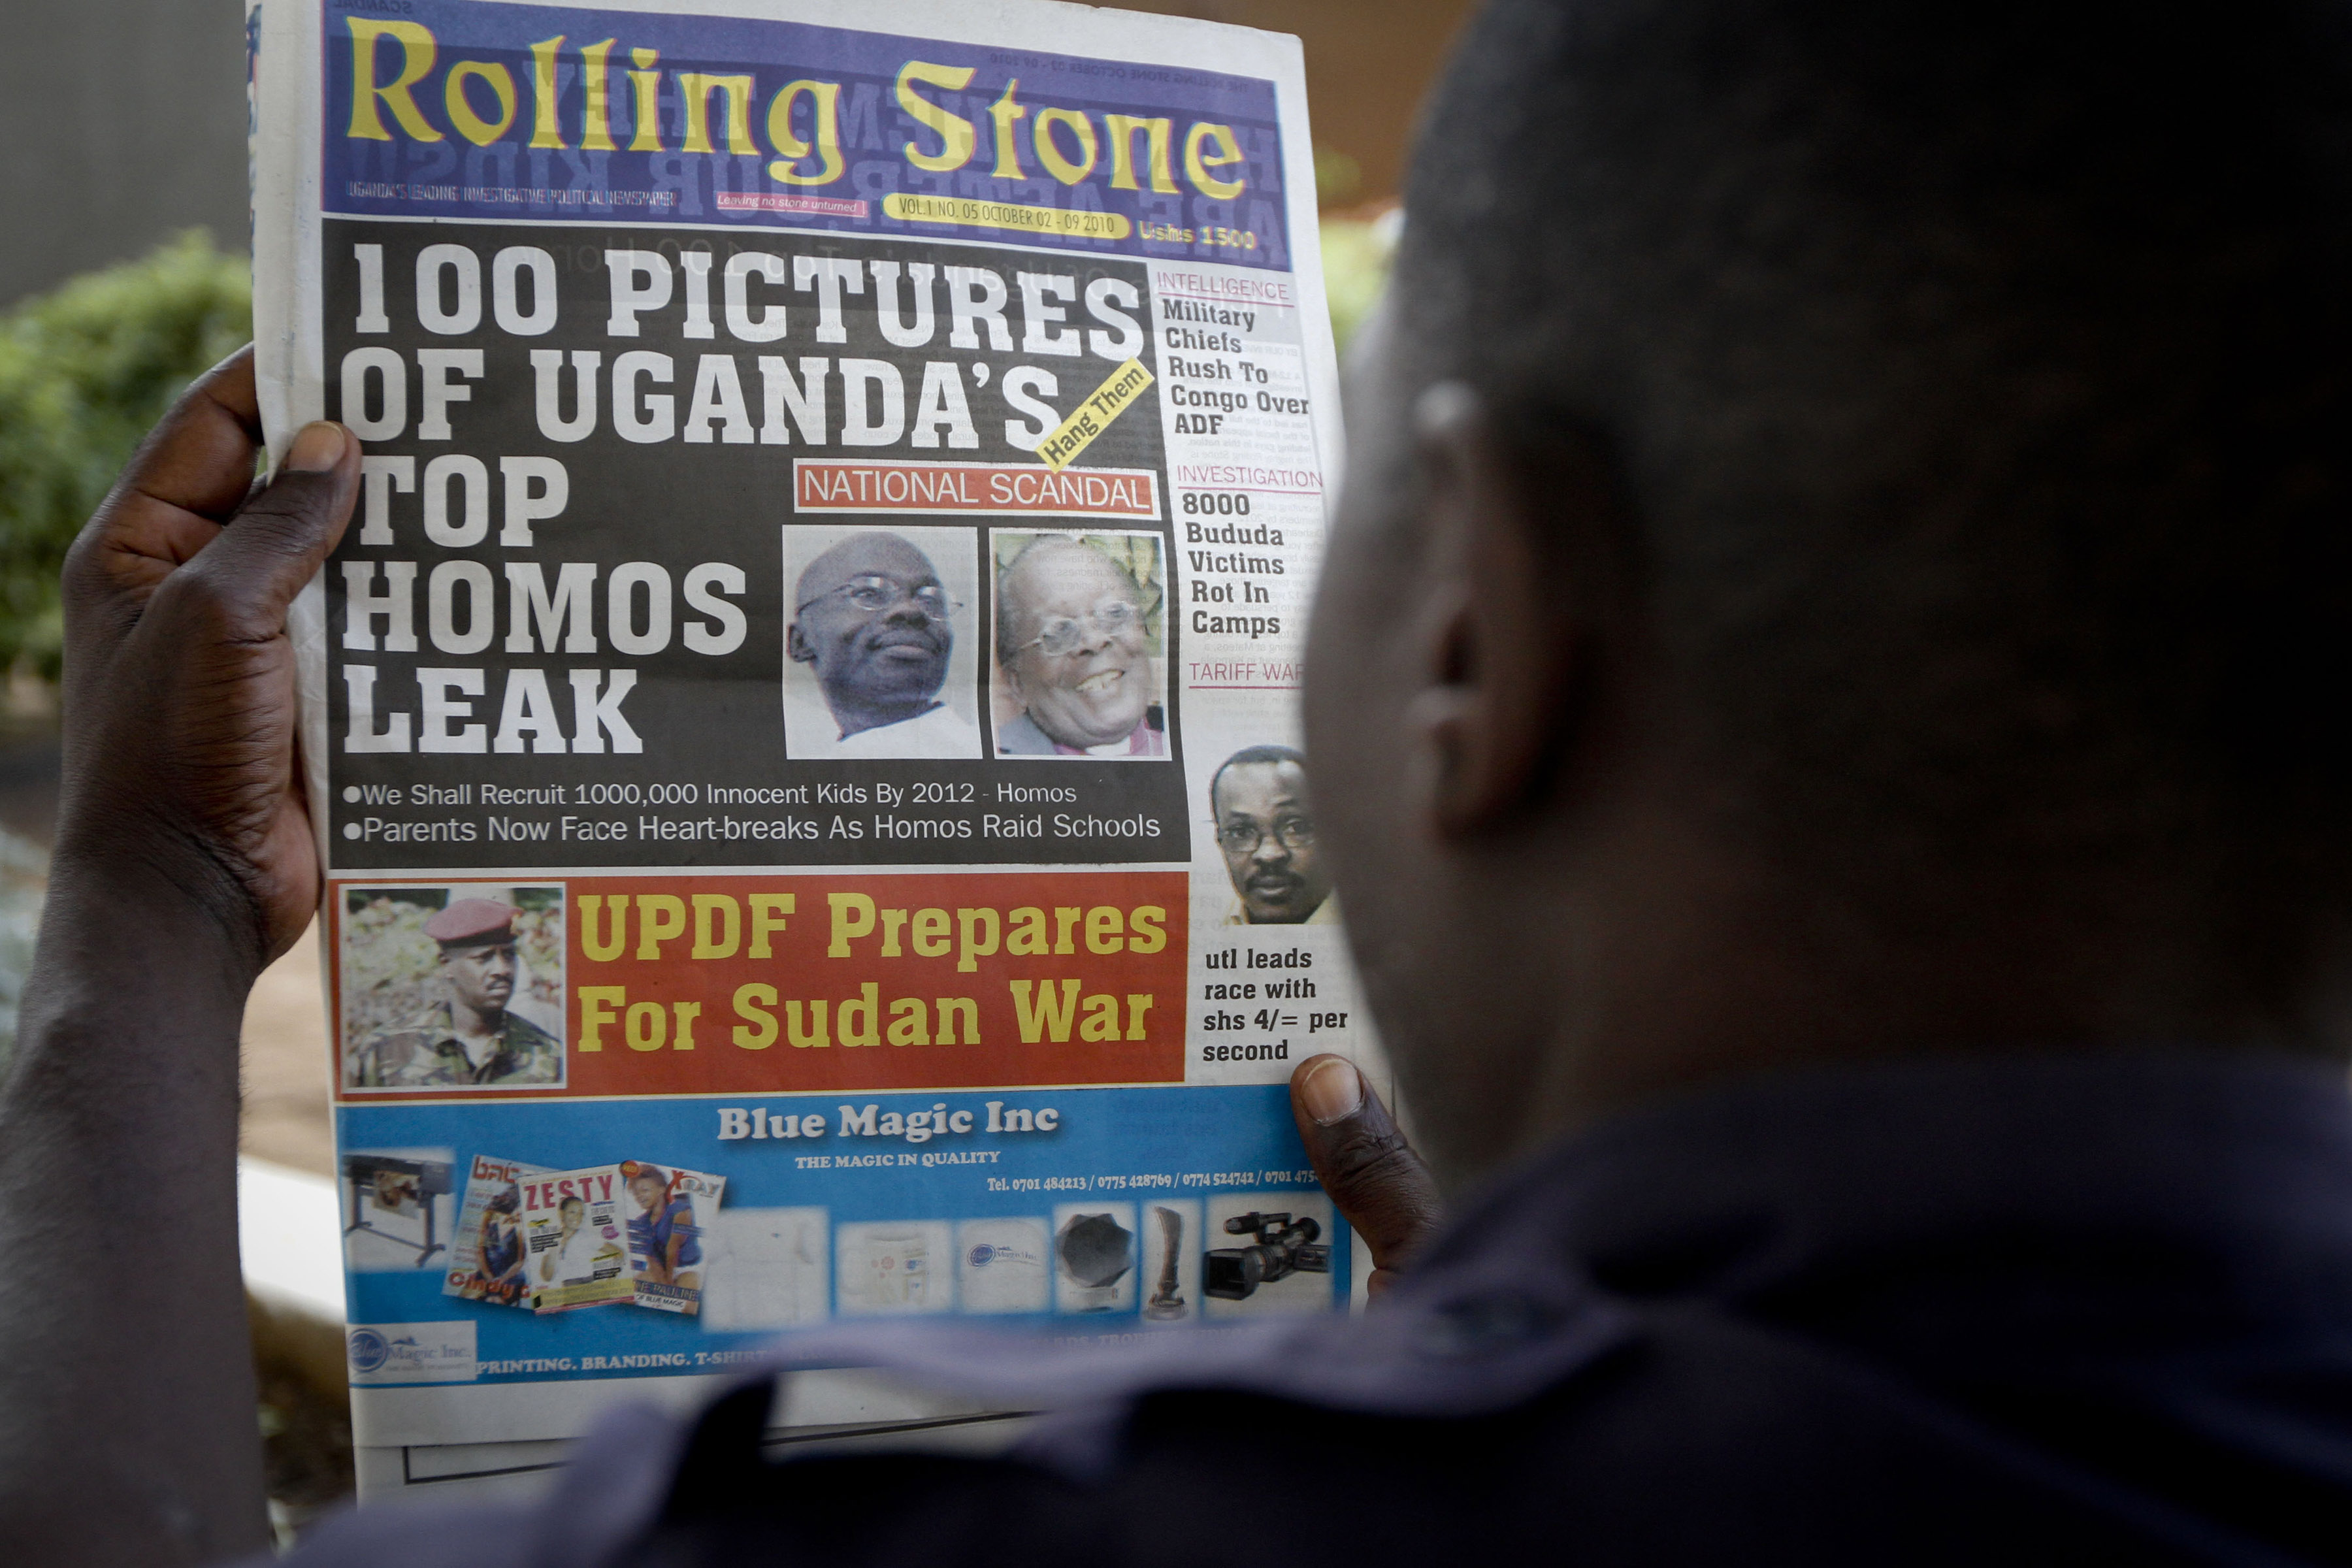 mord, Död, Uganda, Rolling Stone, Homosexualitet